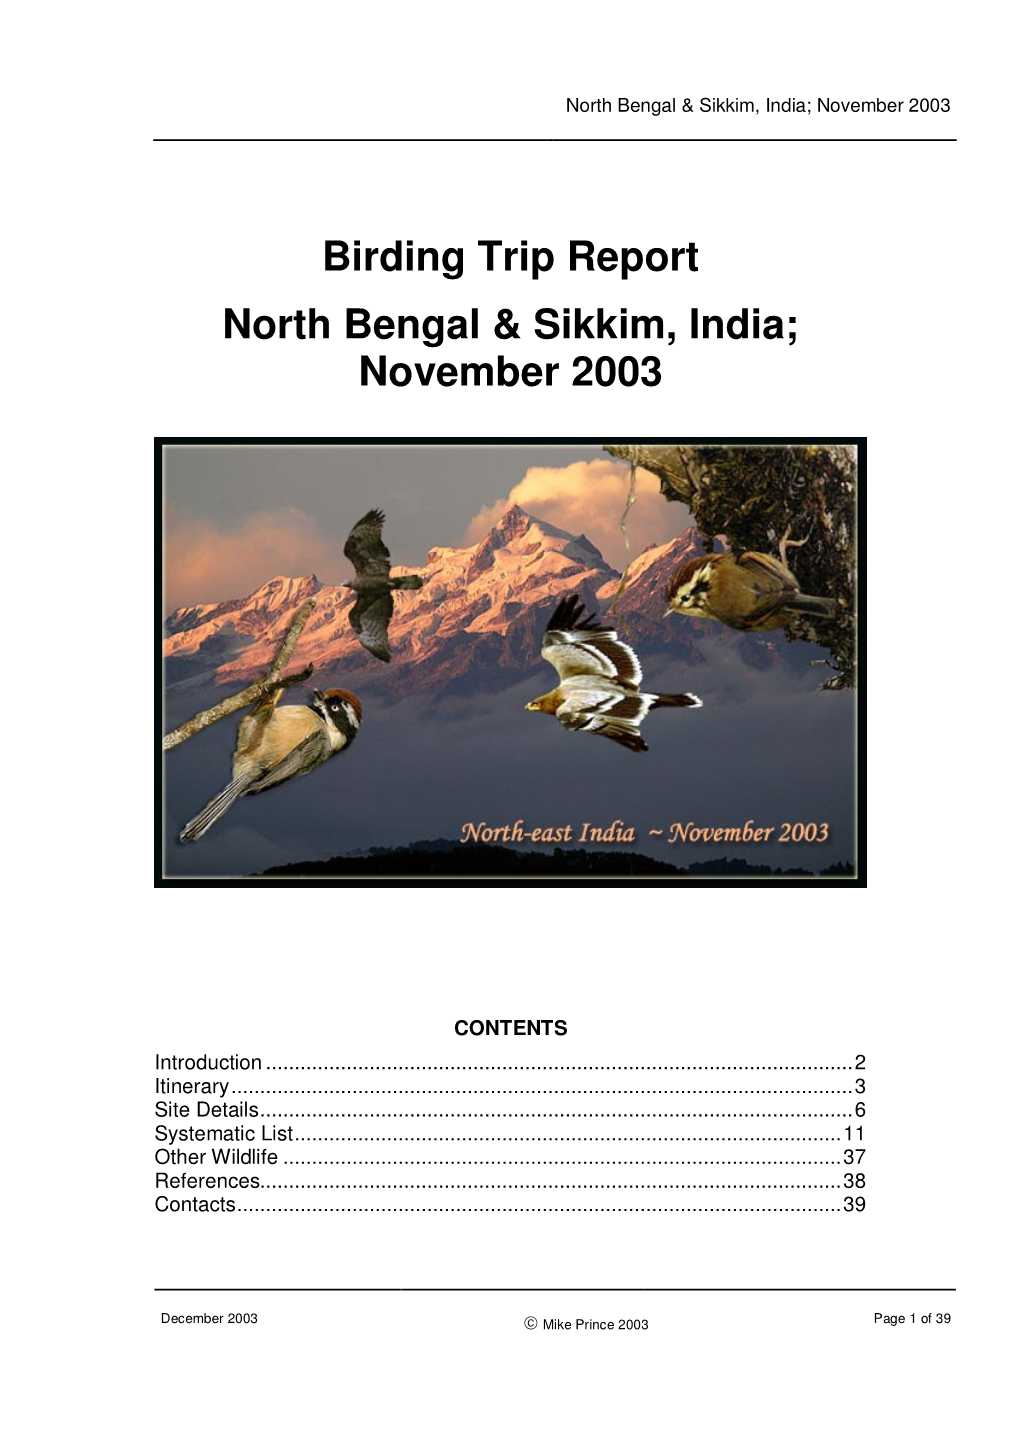 Birding Trip Report North Bengal & Sikkim, India; November 2003